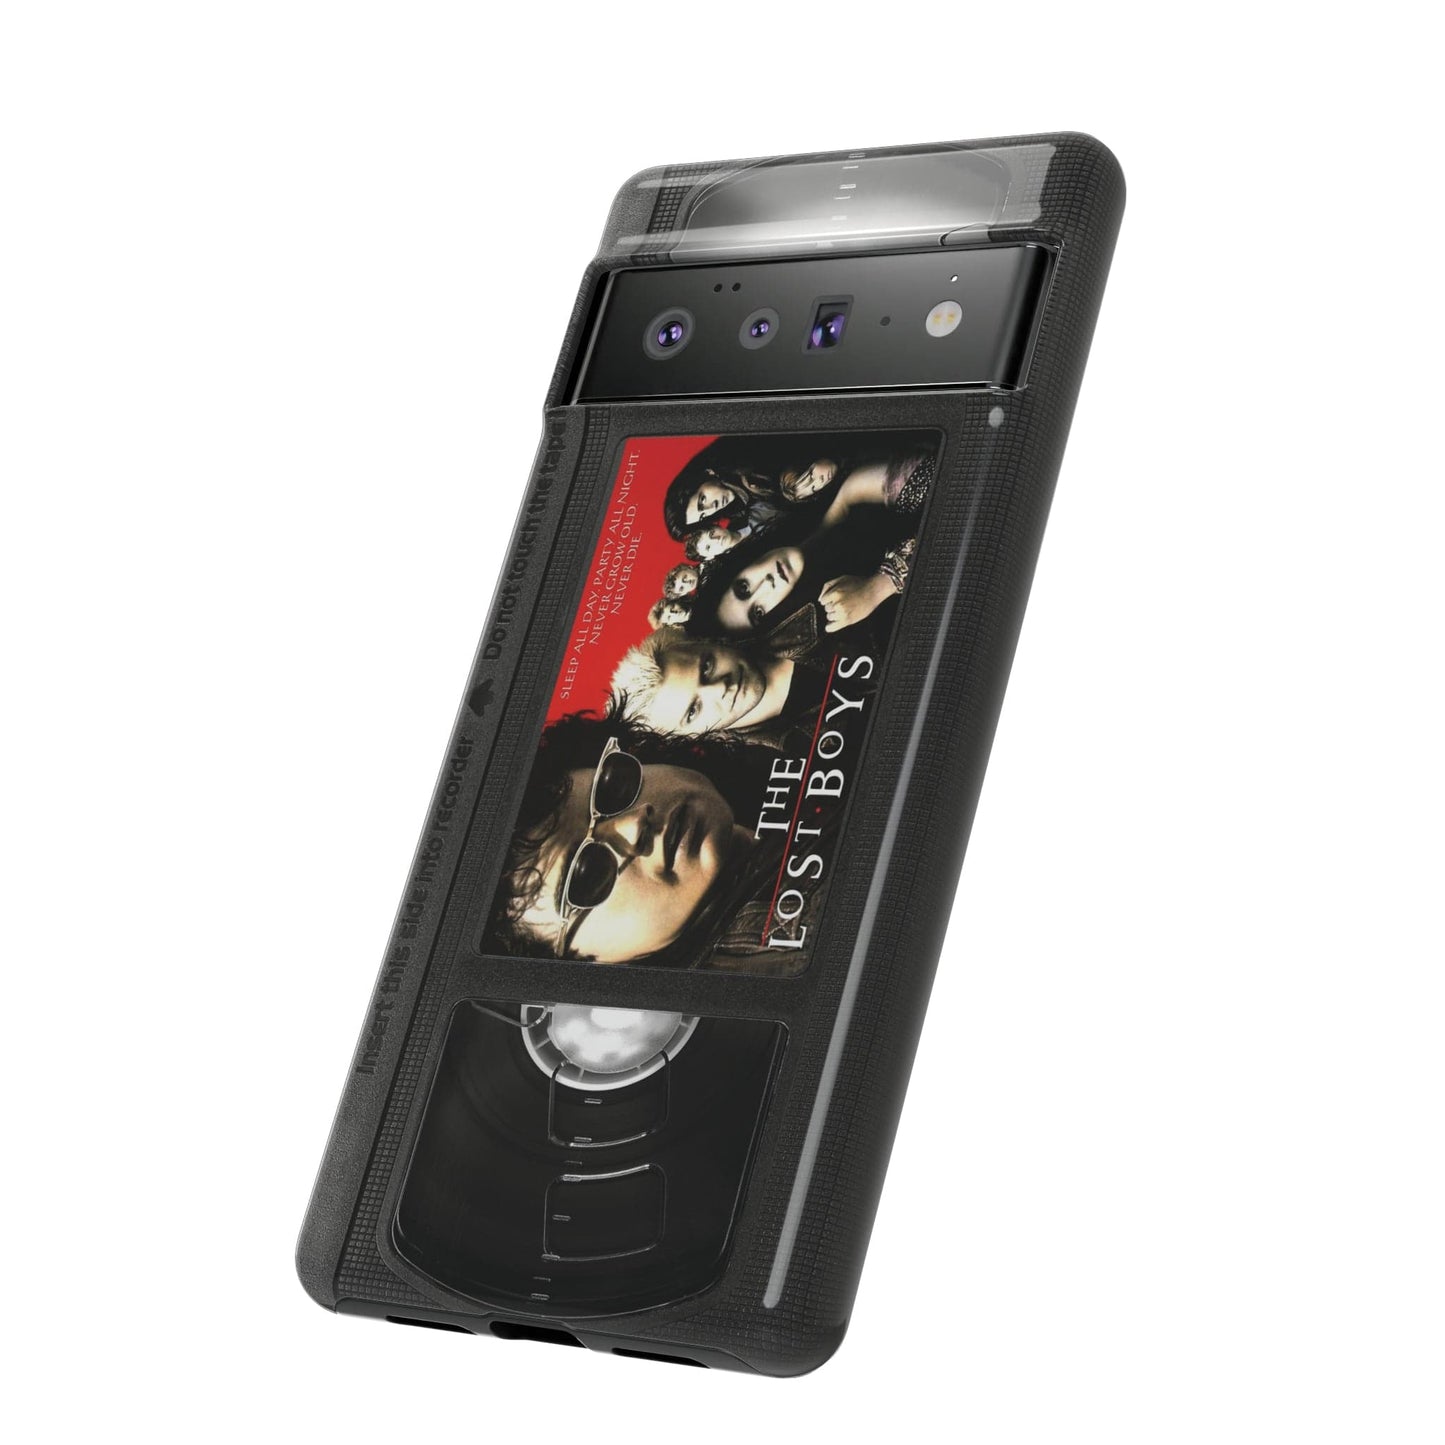 Santa Carla Impact Resistant VHS Phone Case